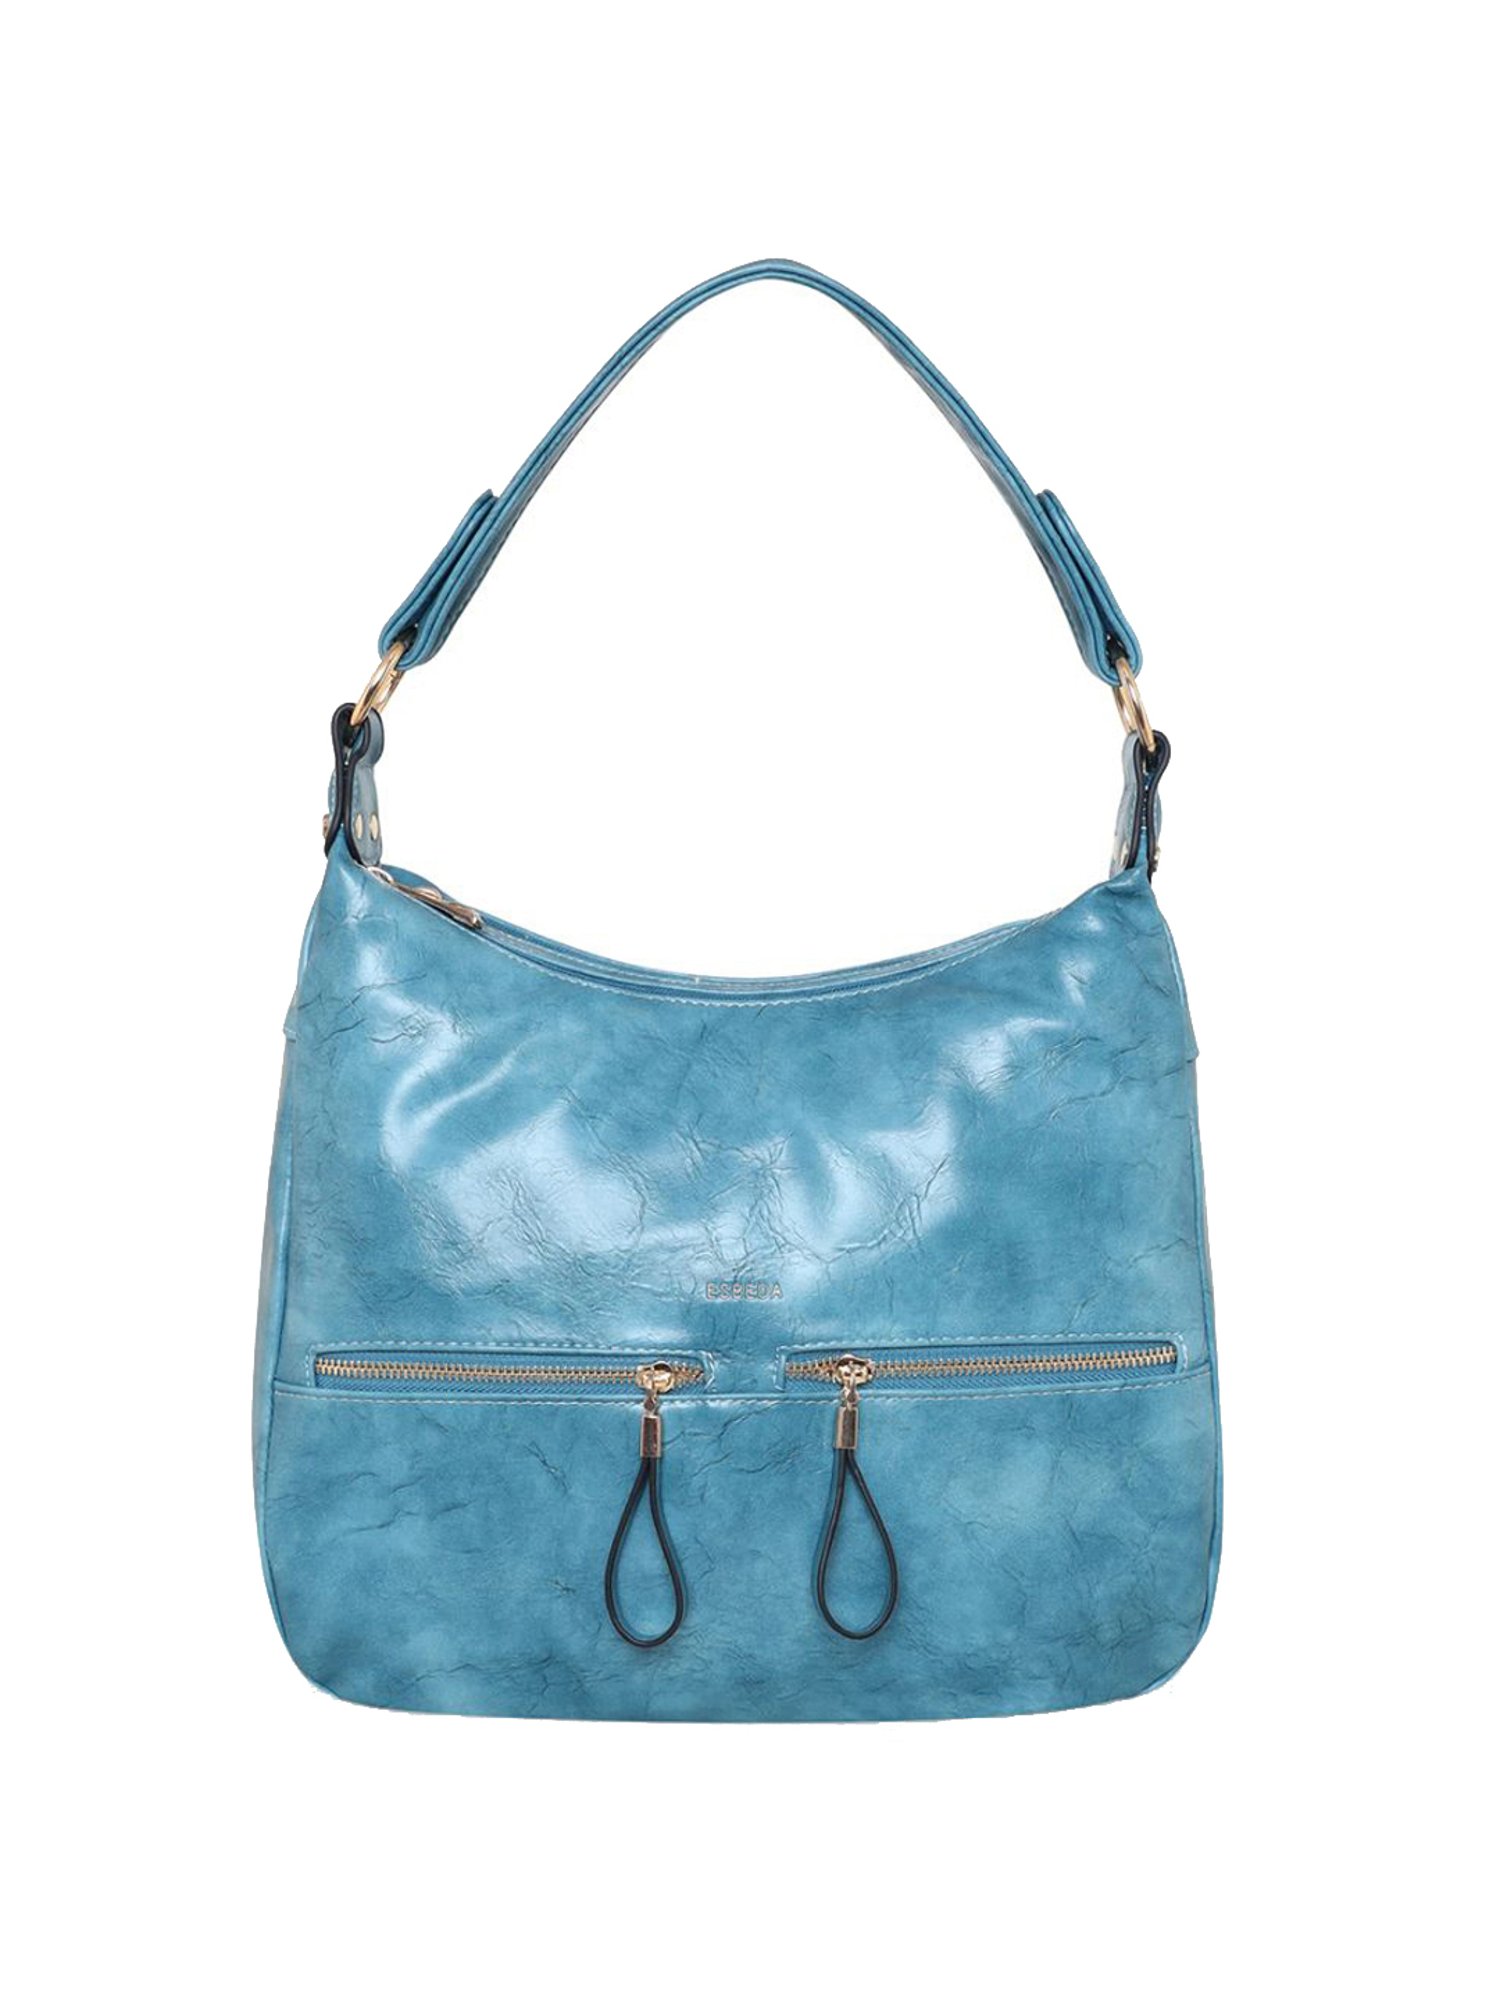 CoCopeaunts Denim Shoulder Bag for Women Hobo Tote Bag Crossbody Bag Large  Capacity Handbag Casual Purse - Walmart.com